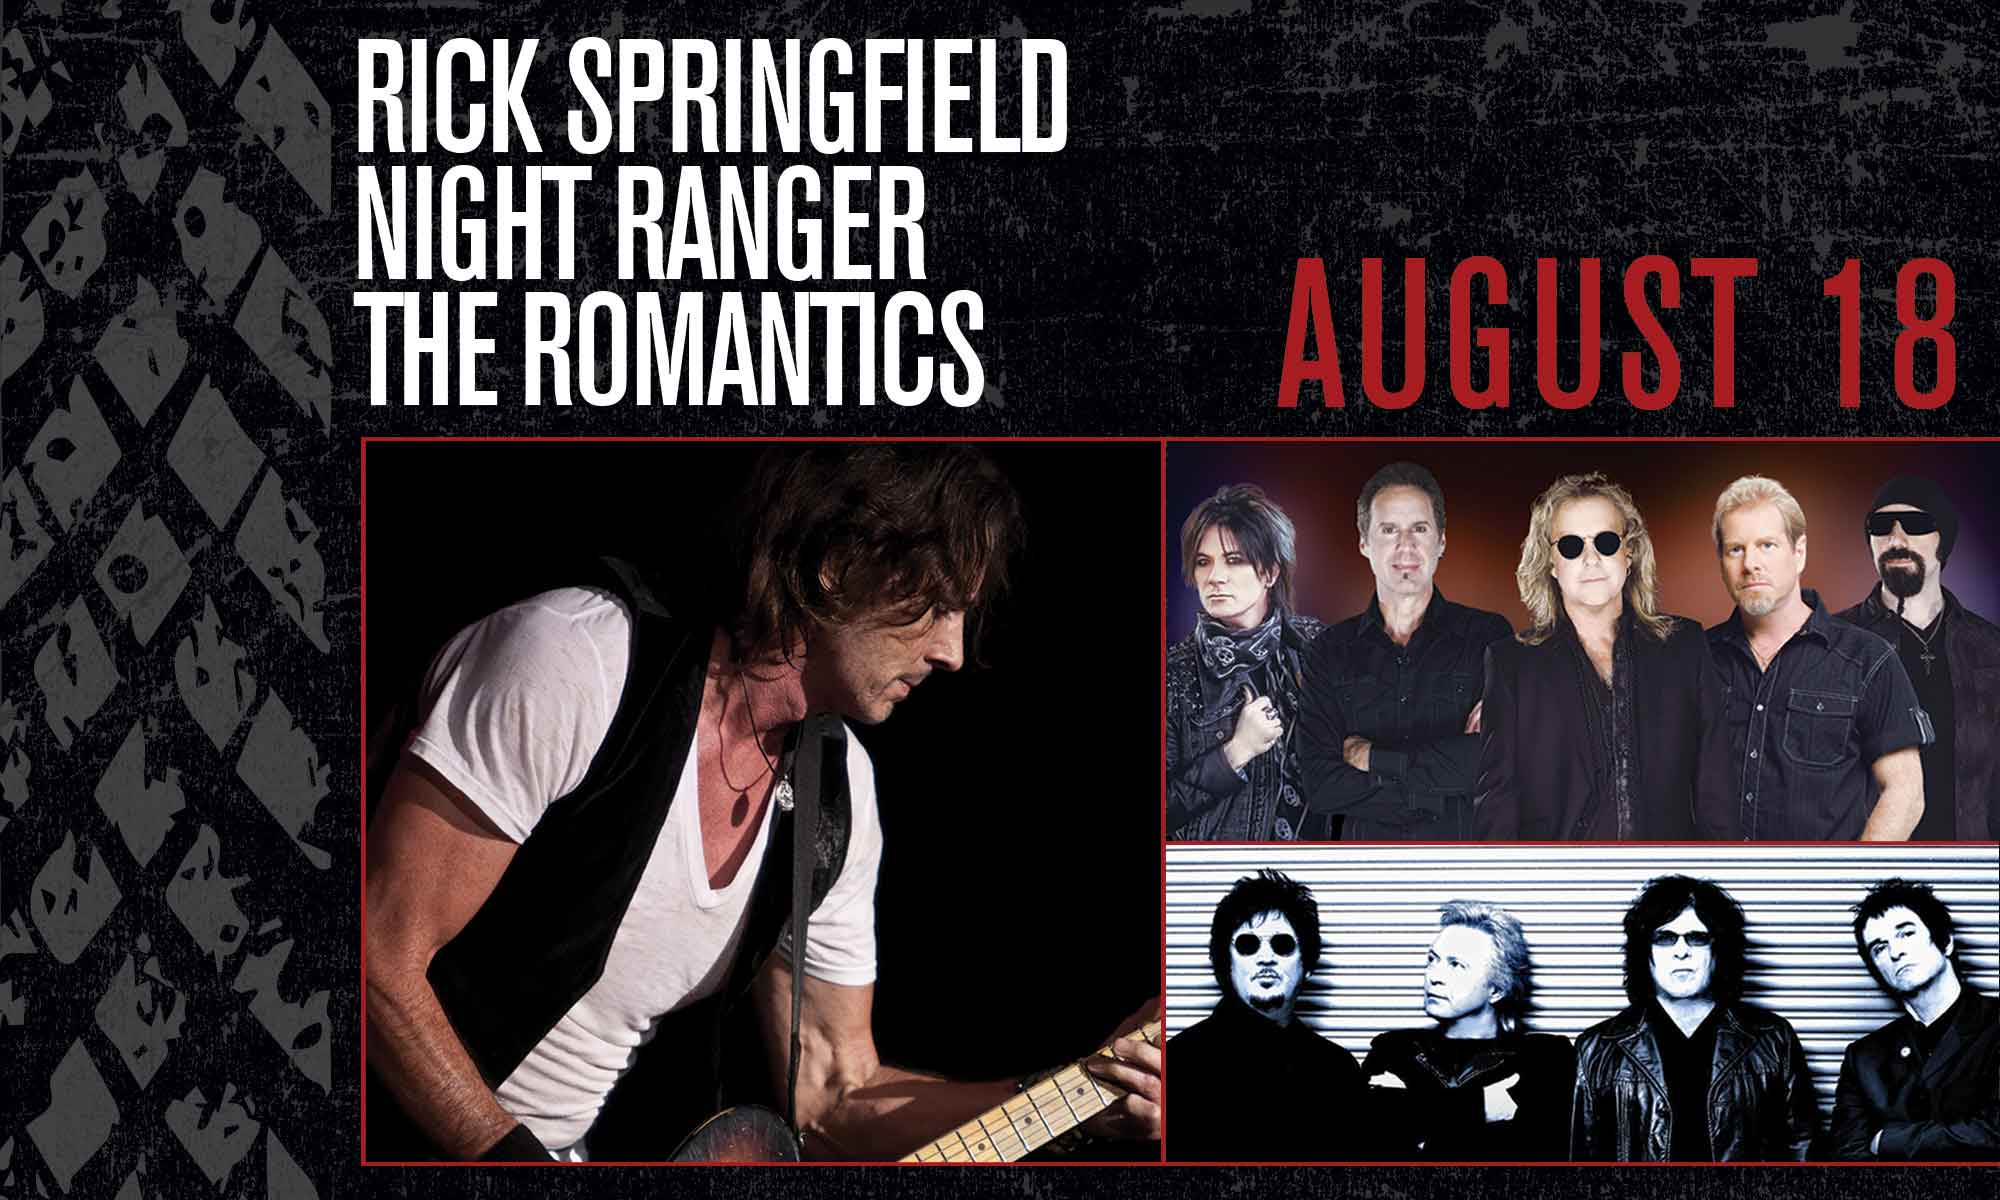 Rick Springfield at Coney Island Amphitheater on 08-18-16